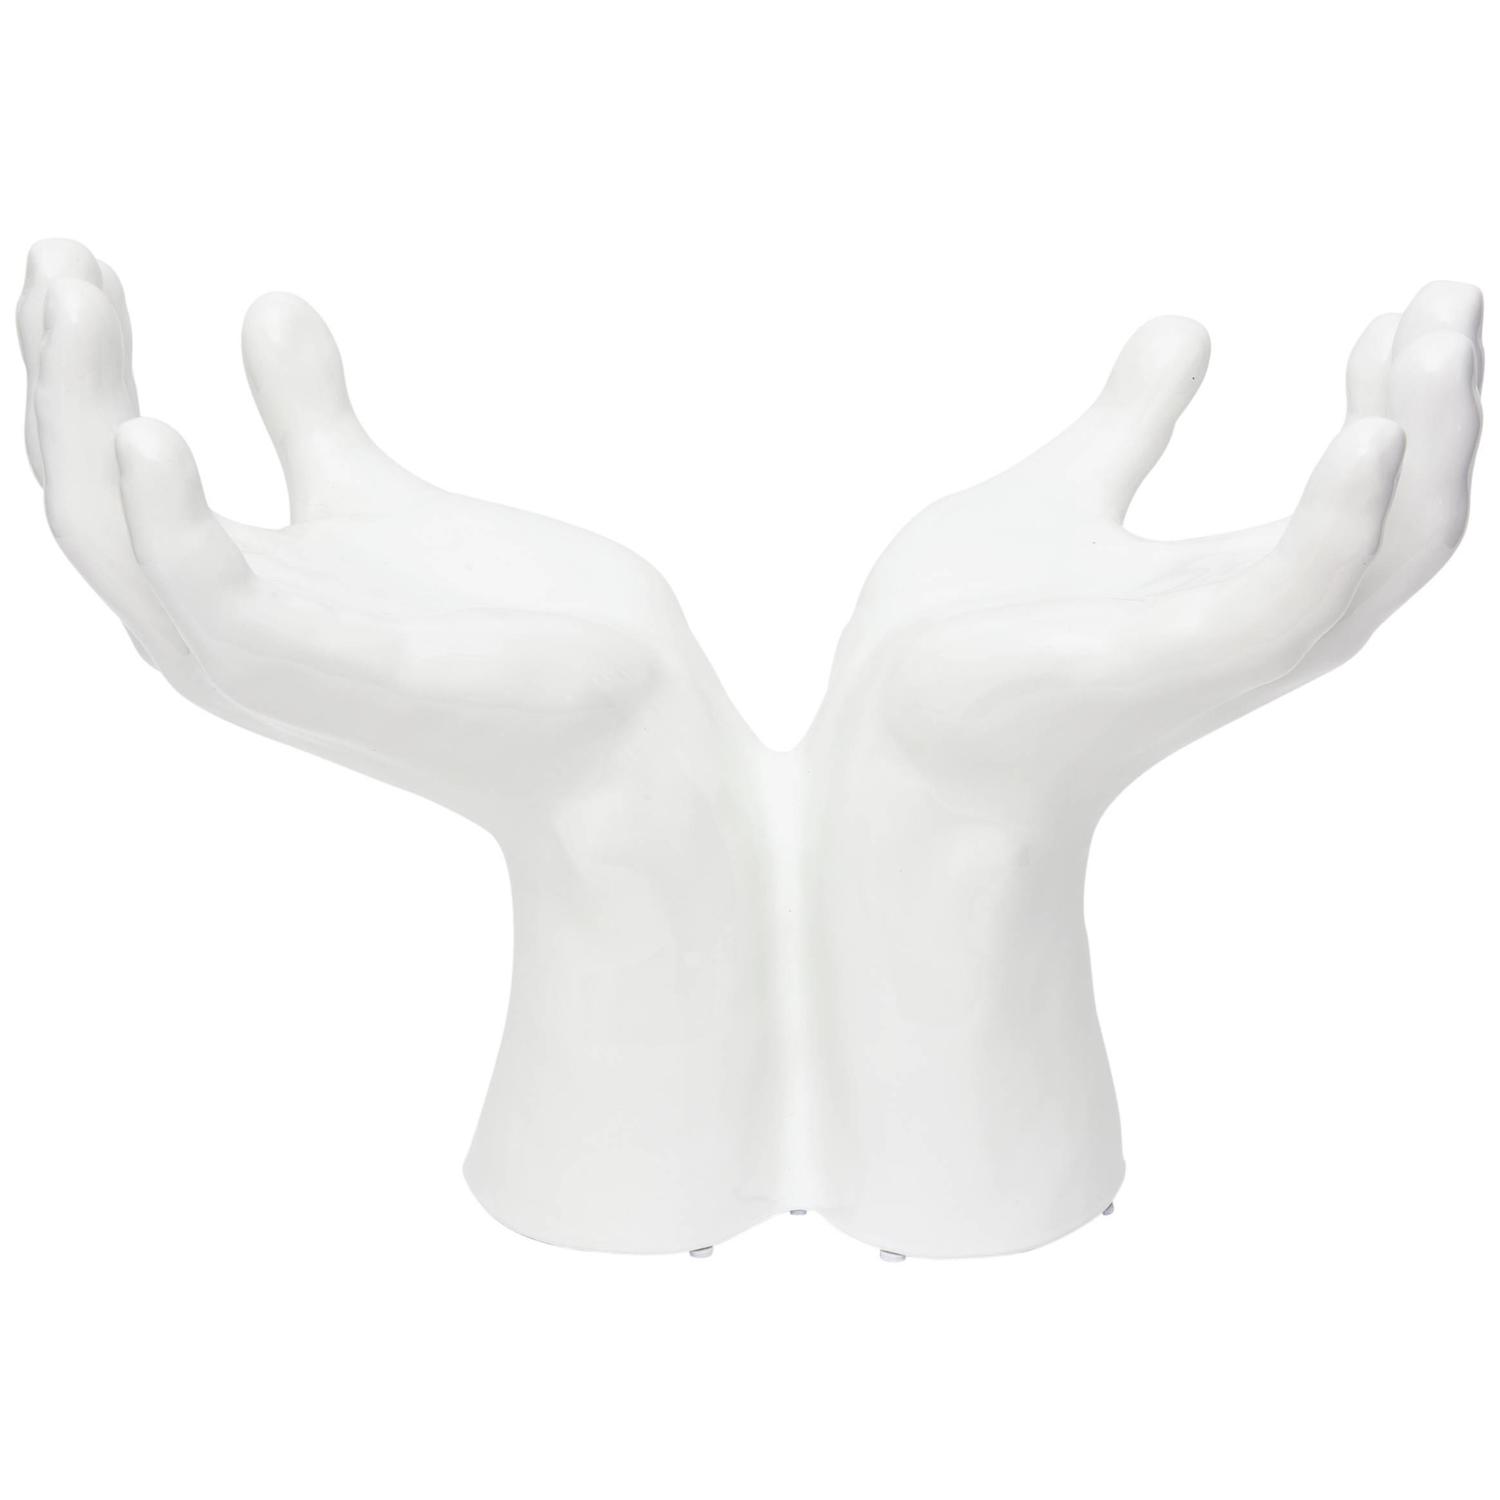 Monumental Italian Ceramic Hands Sculpture at 1stdibs